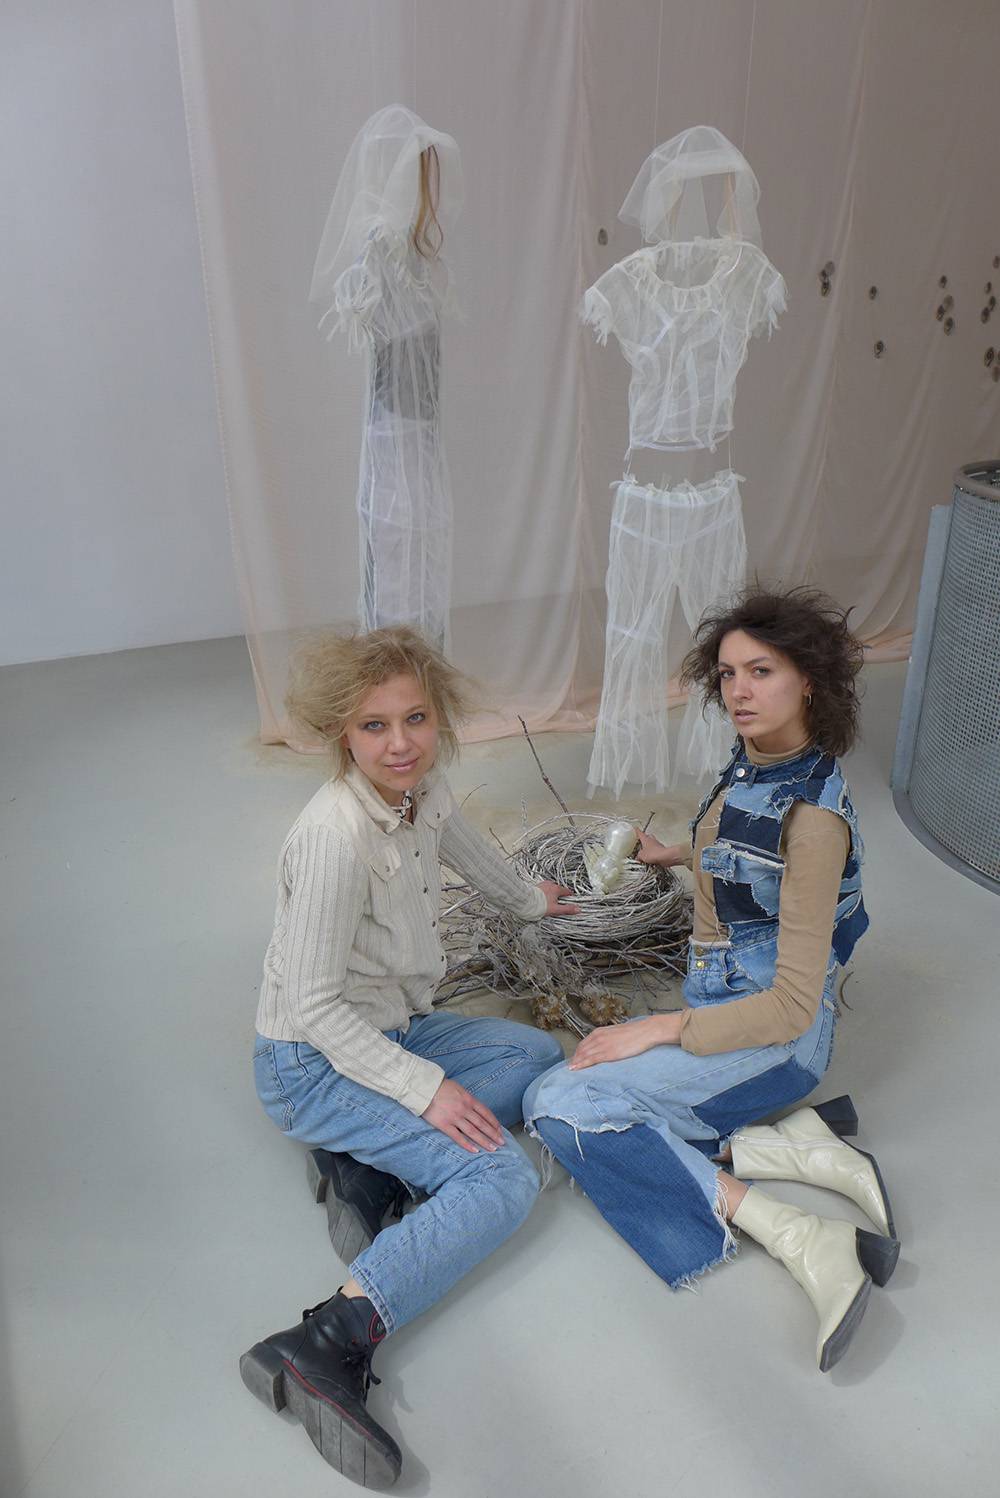 cyber_nymphs duet (Justyna Górowska i Ewelina Jarosz) z „Hybrid baby shrimp, Kreis Gallery, 2022, Fot. Aleksandra Grzonkowska